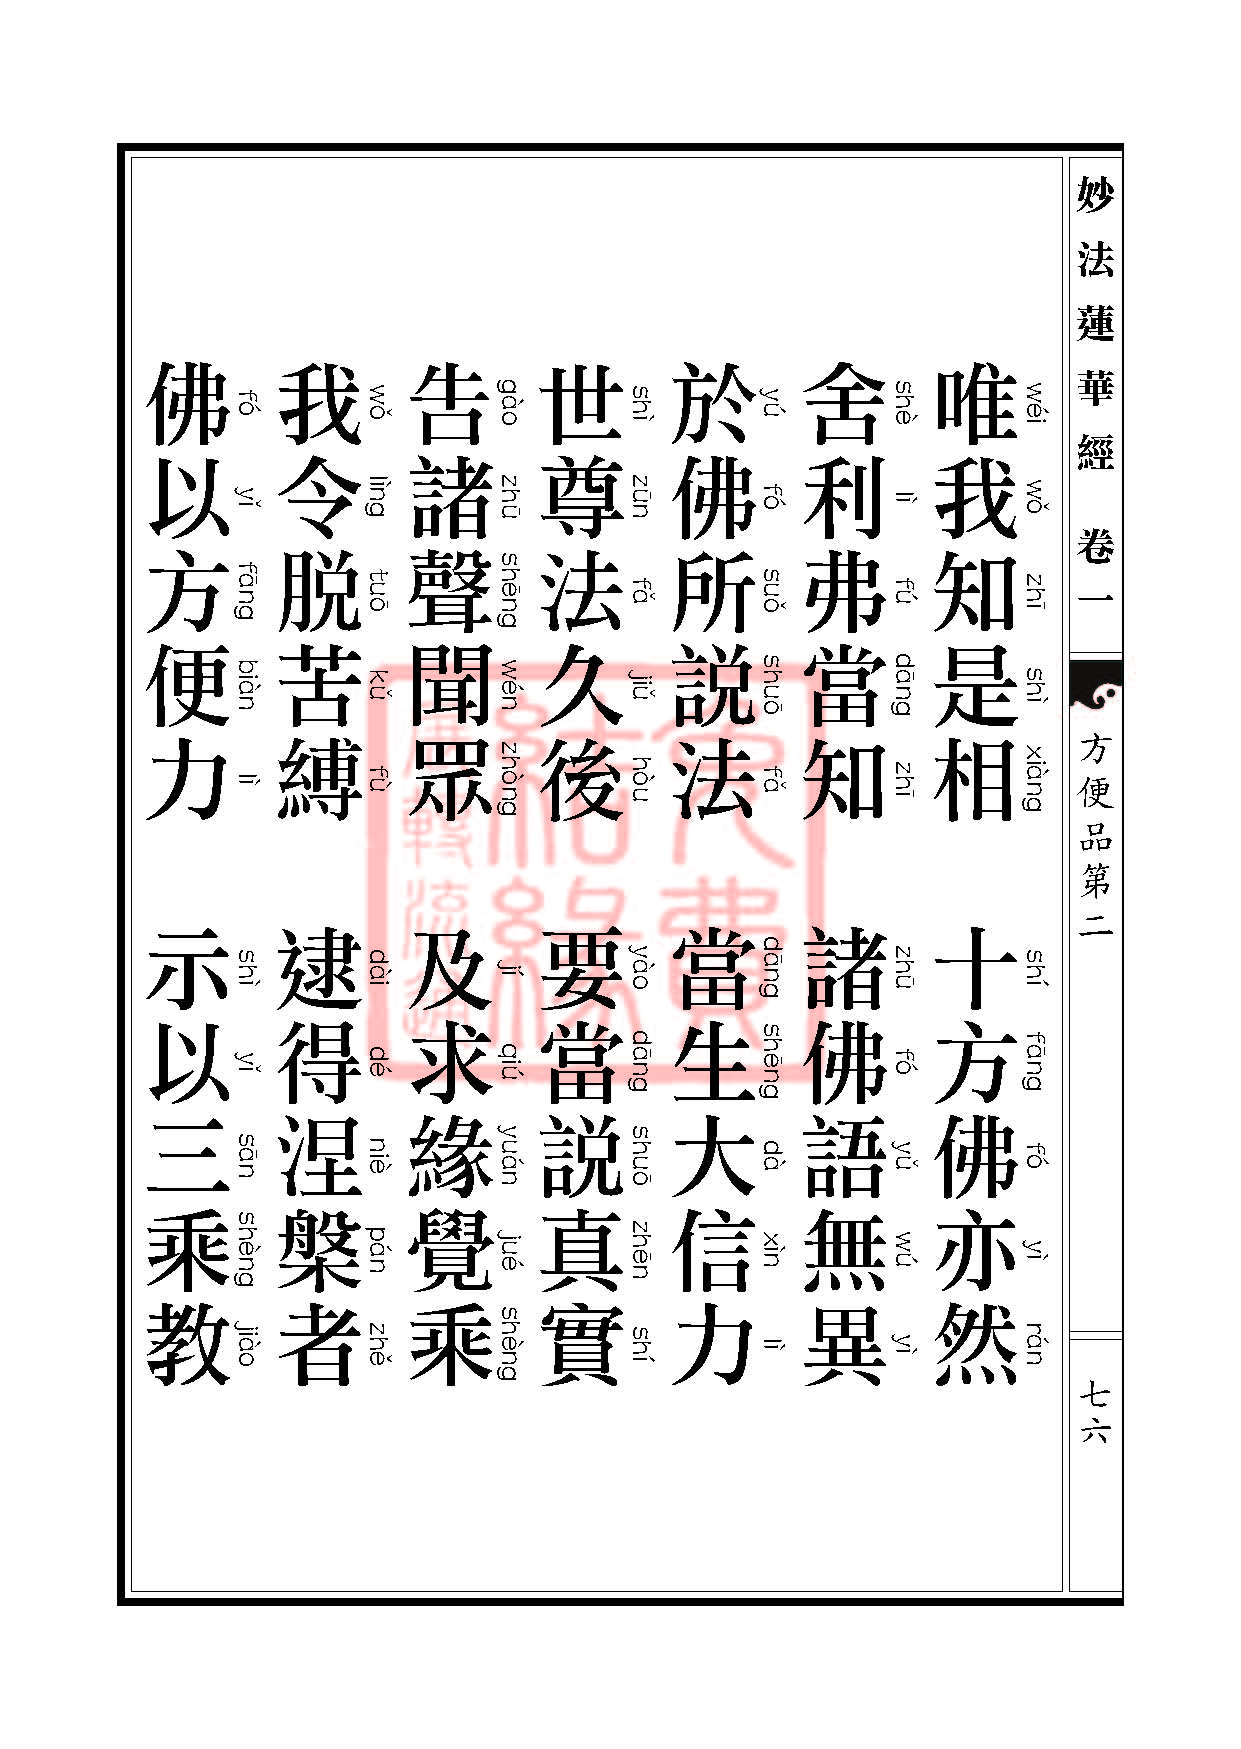 Book_FHJ_HK-A6-PY_Web_页面_076.jpg